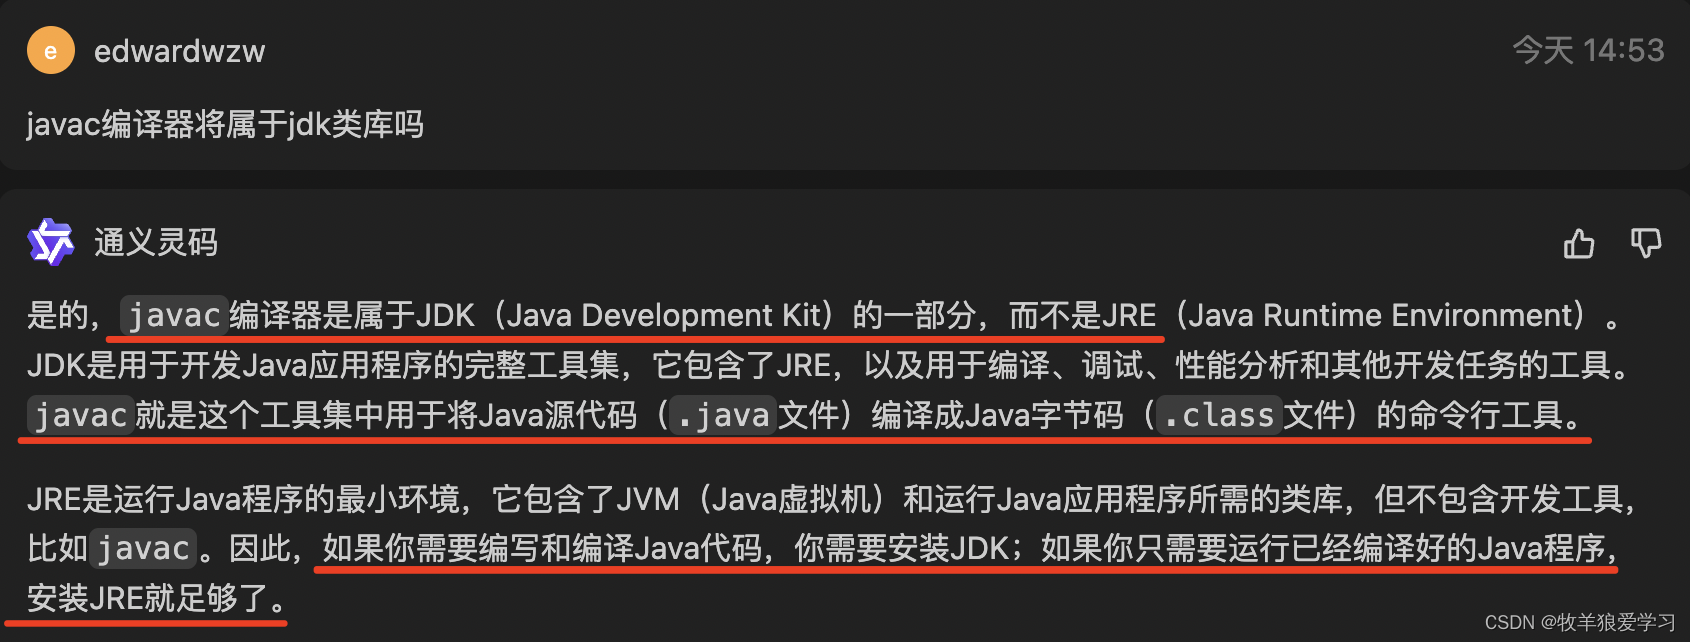 JDK JRE JVM 三者的关系